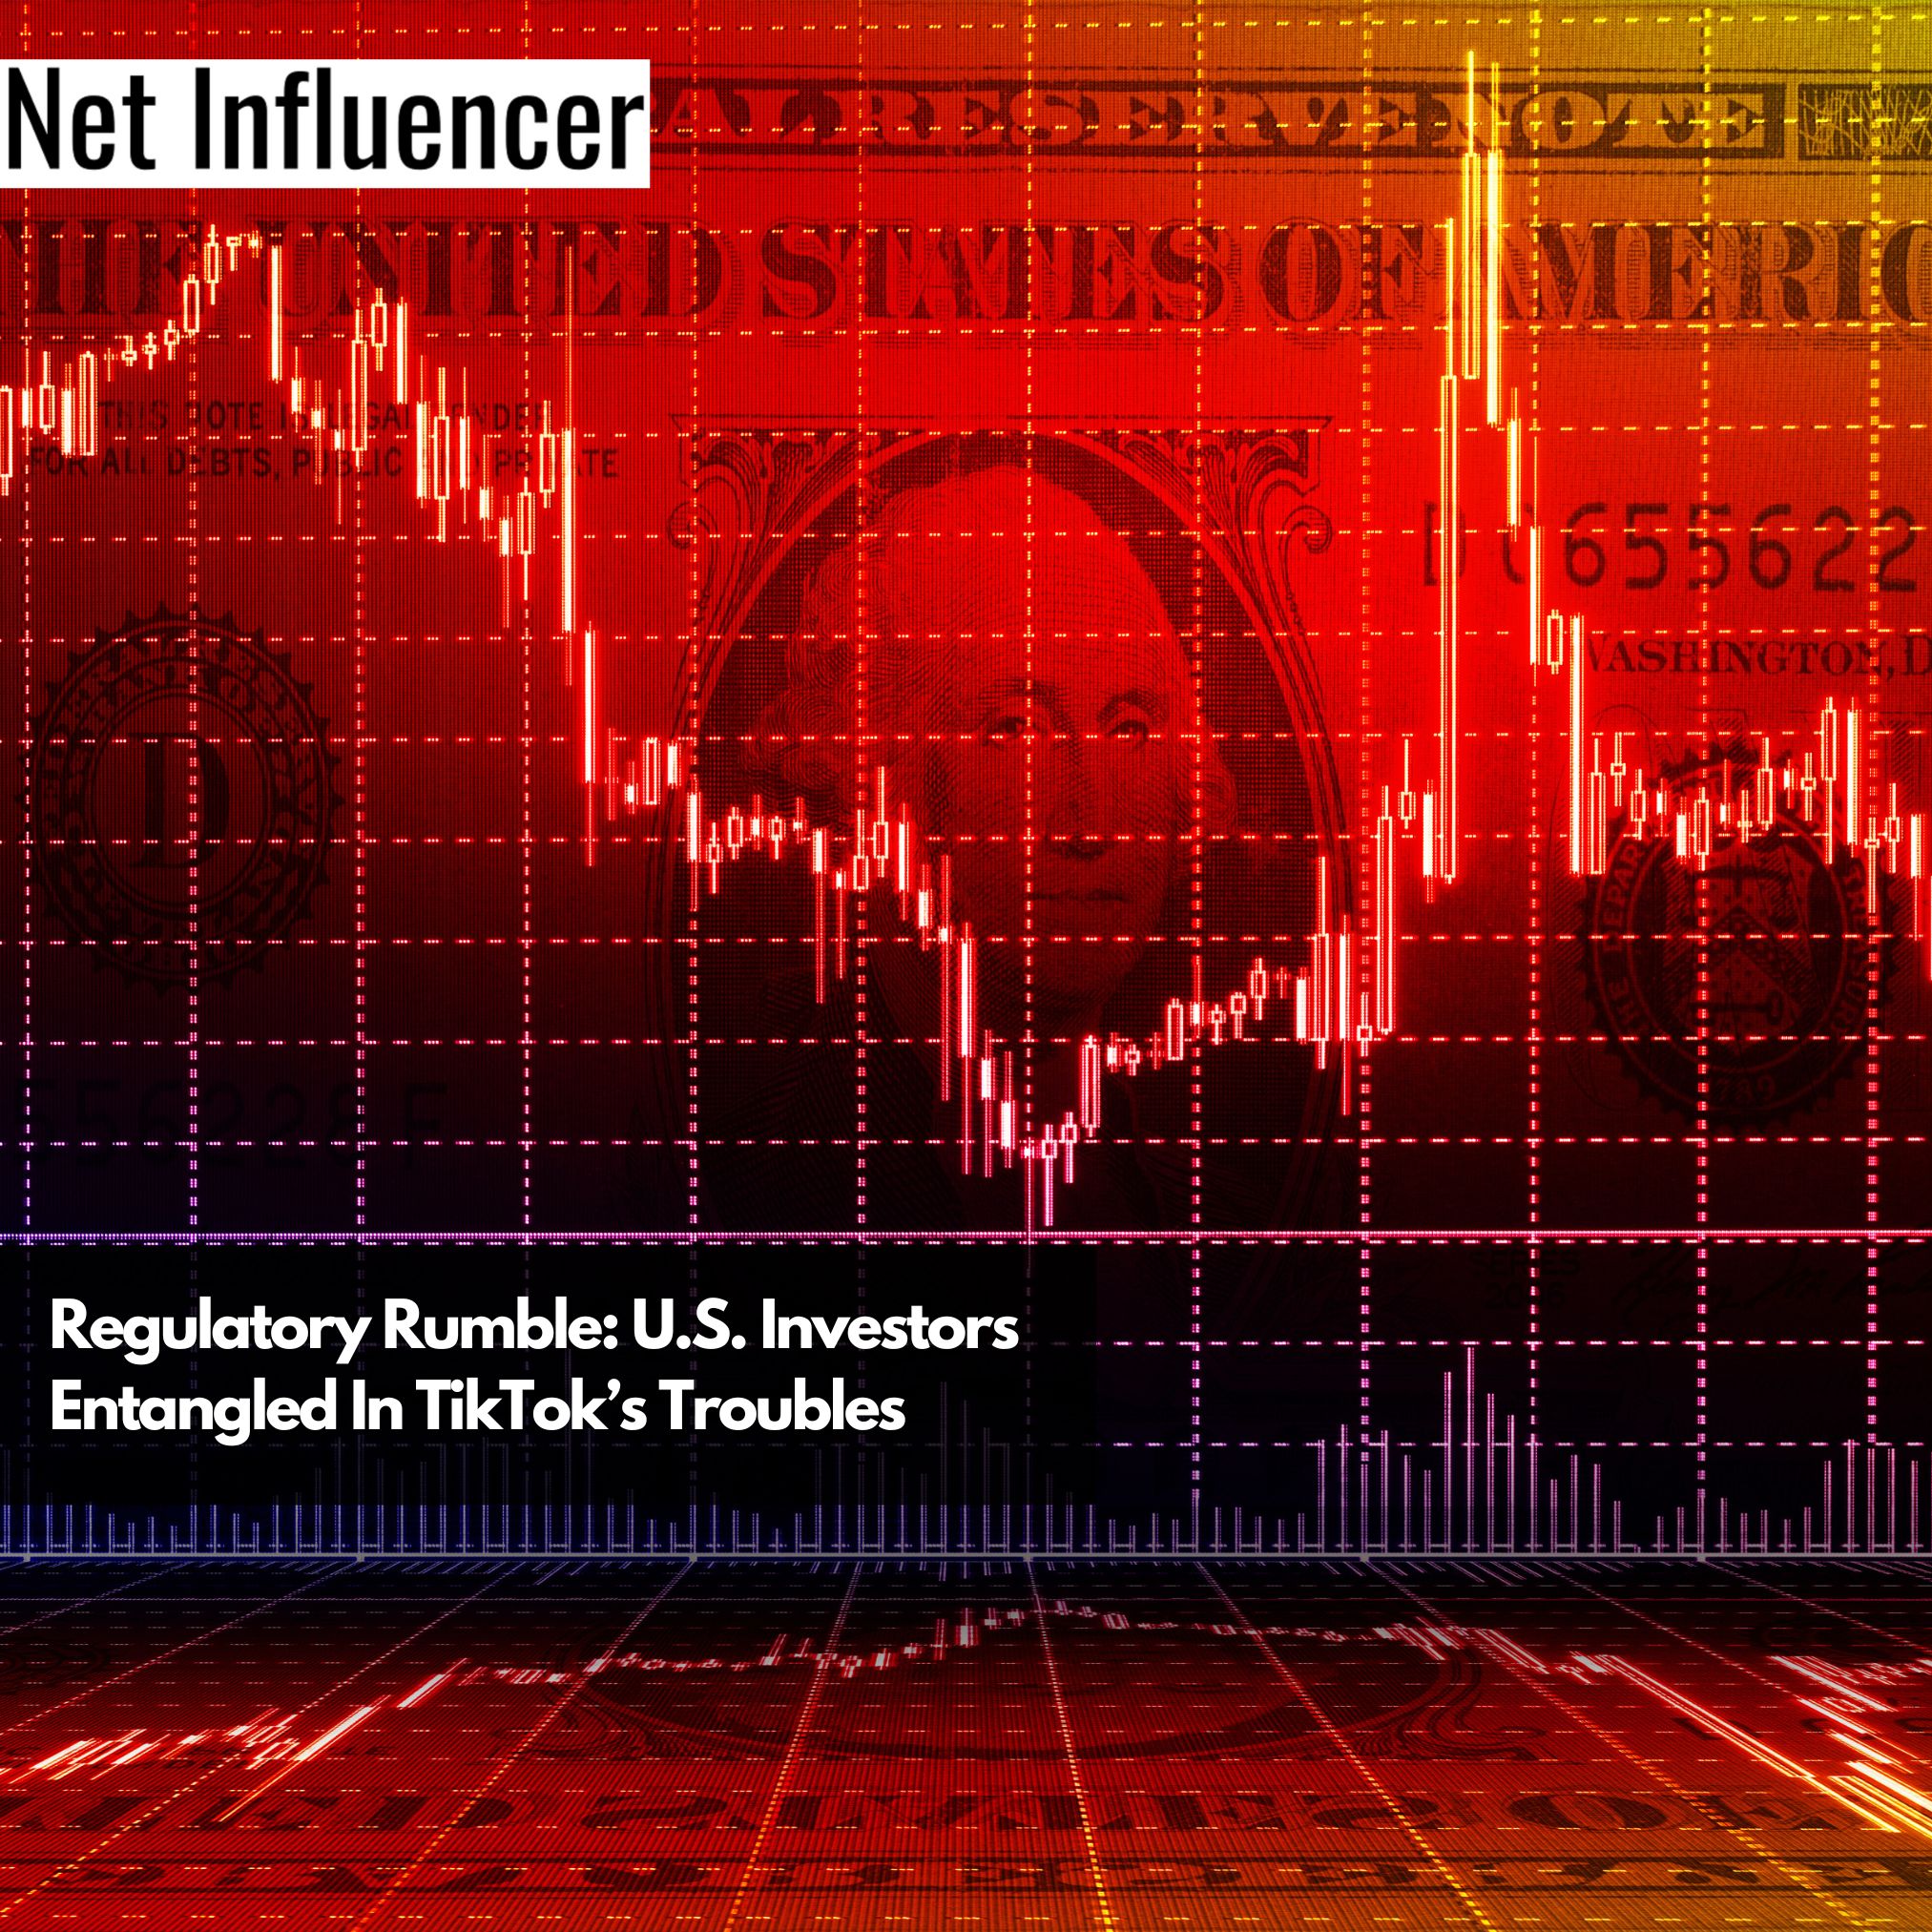 Regulatory Rumble U.S. Investors Entangled In TikTok’s Troubles